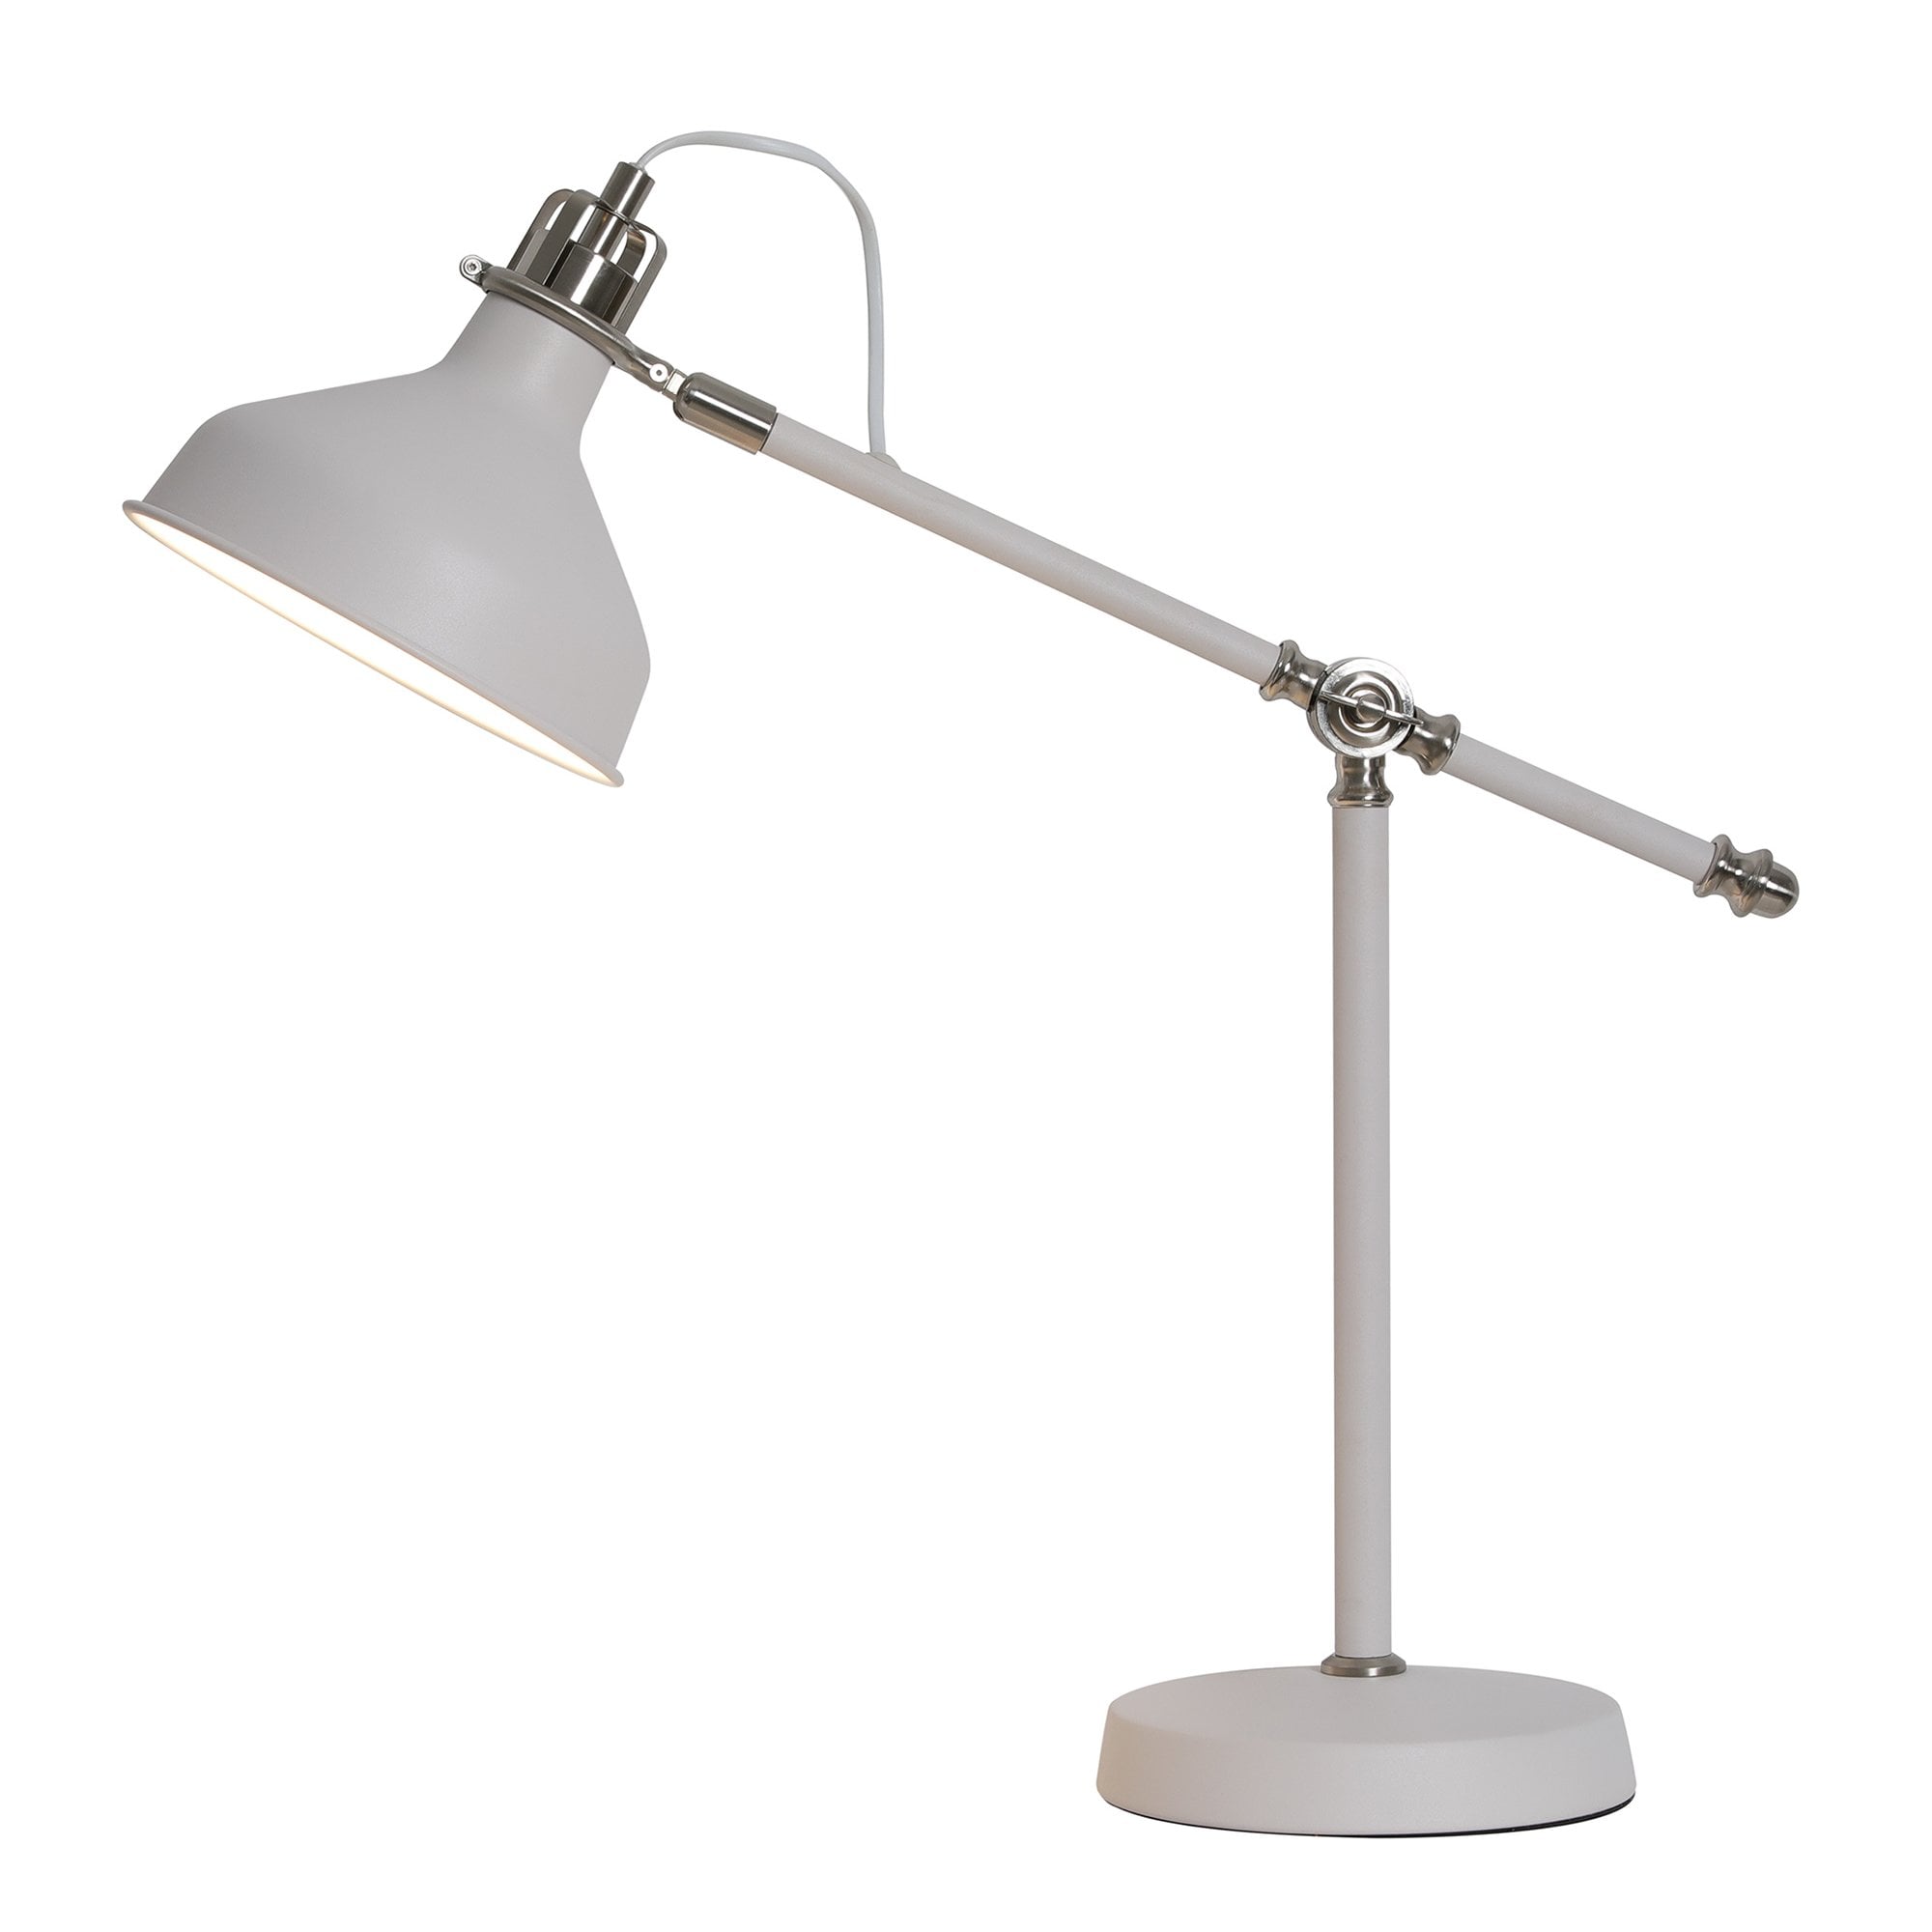 Adjustable Table Lamp, 1 x E27, Sand White/Satin Nickel/White